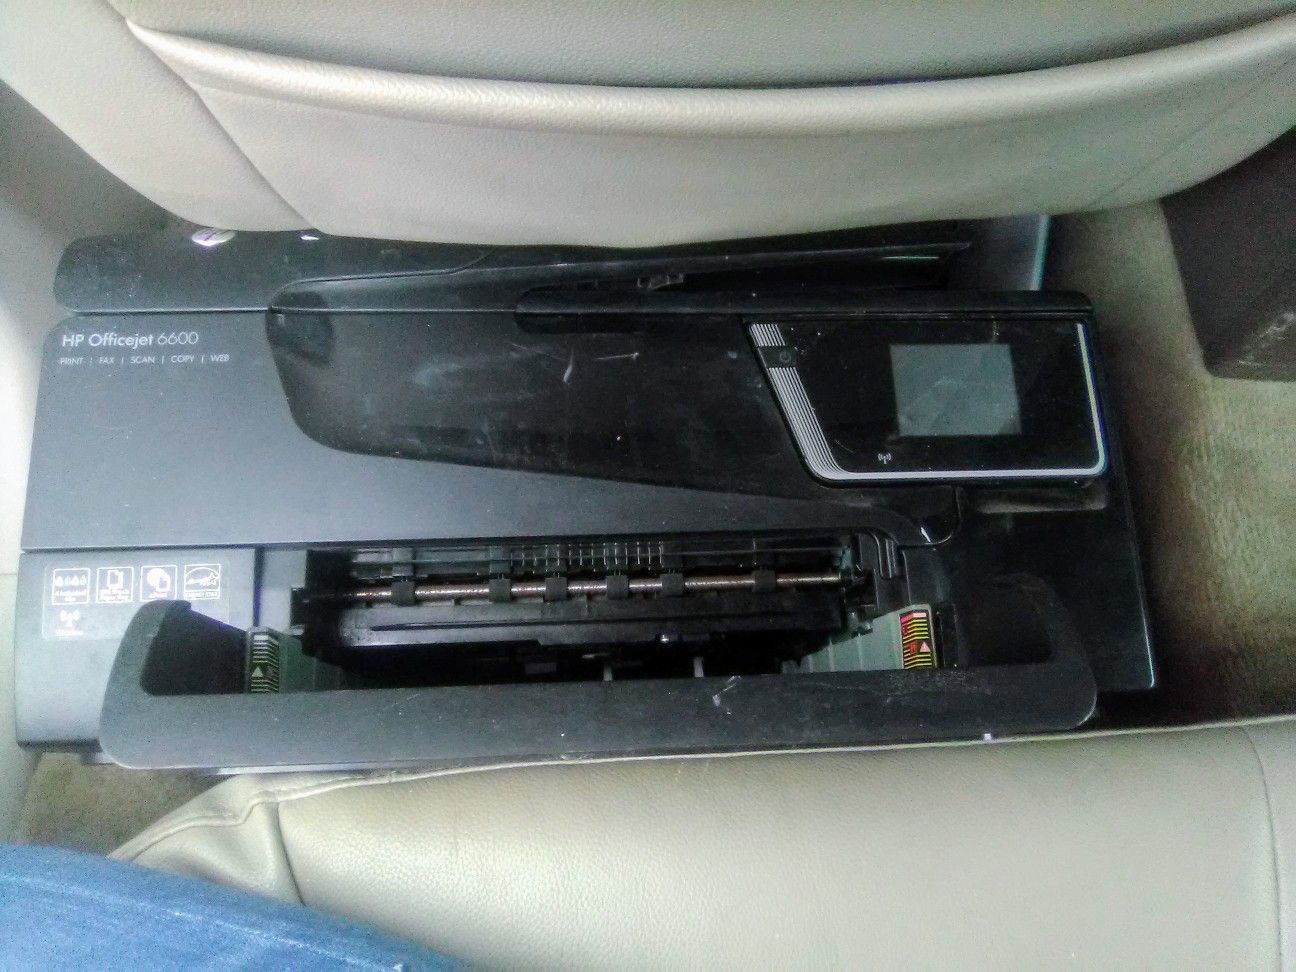 HP 6600 wireless copy fax printer